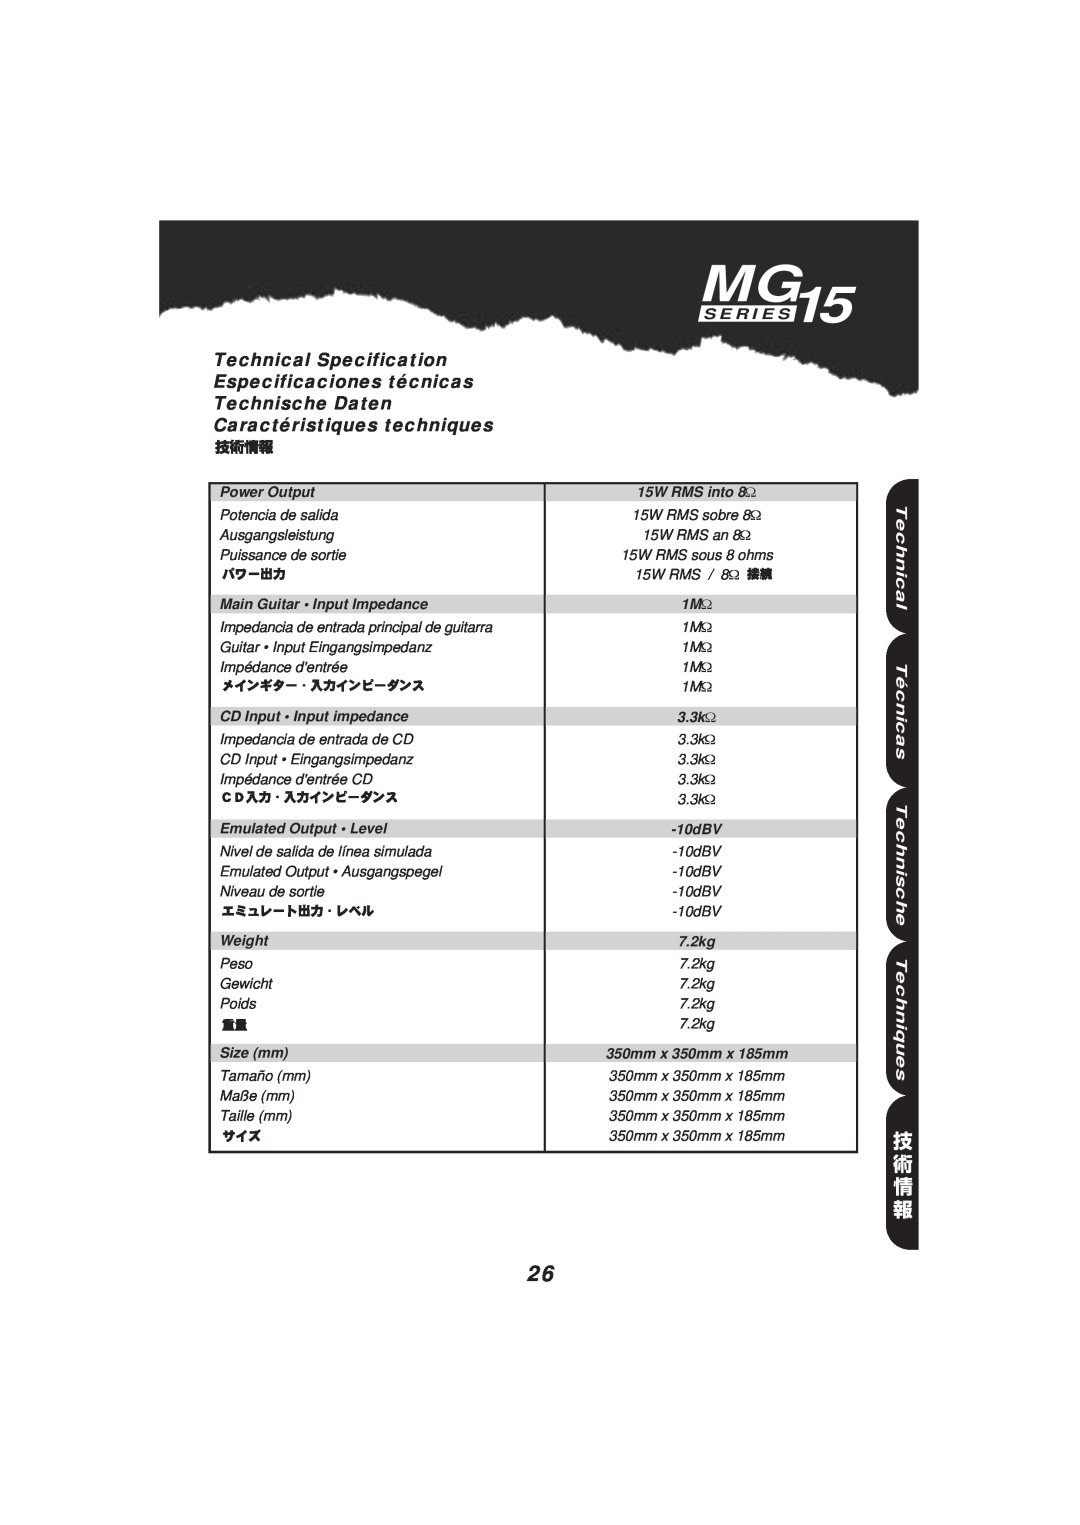 Marshall Amplification MG15 Series Technical Técnicas Technische Techniques, Technical Specification, Technische Daten 